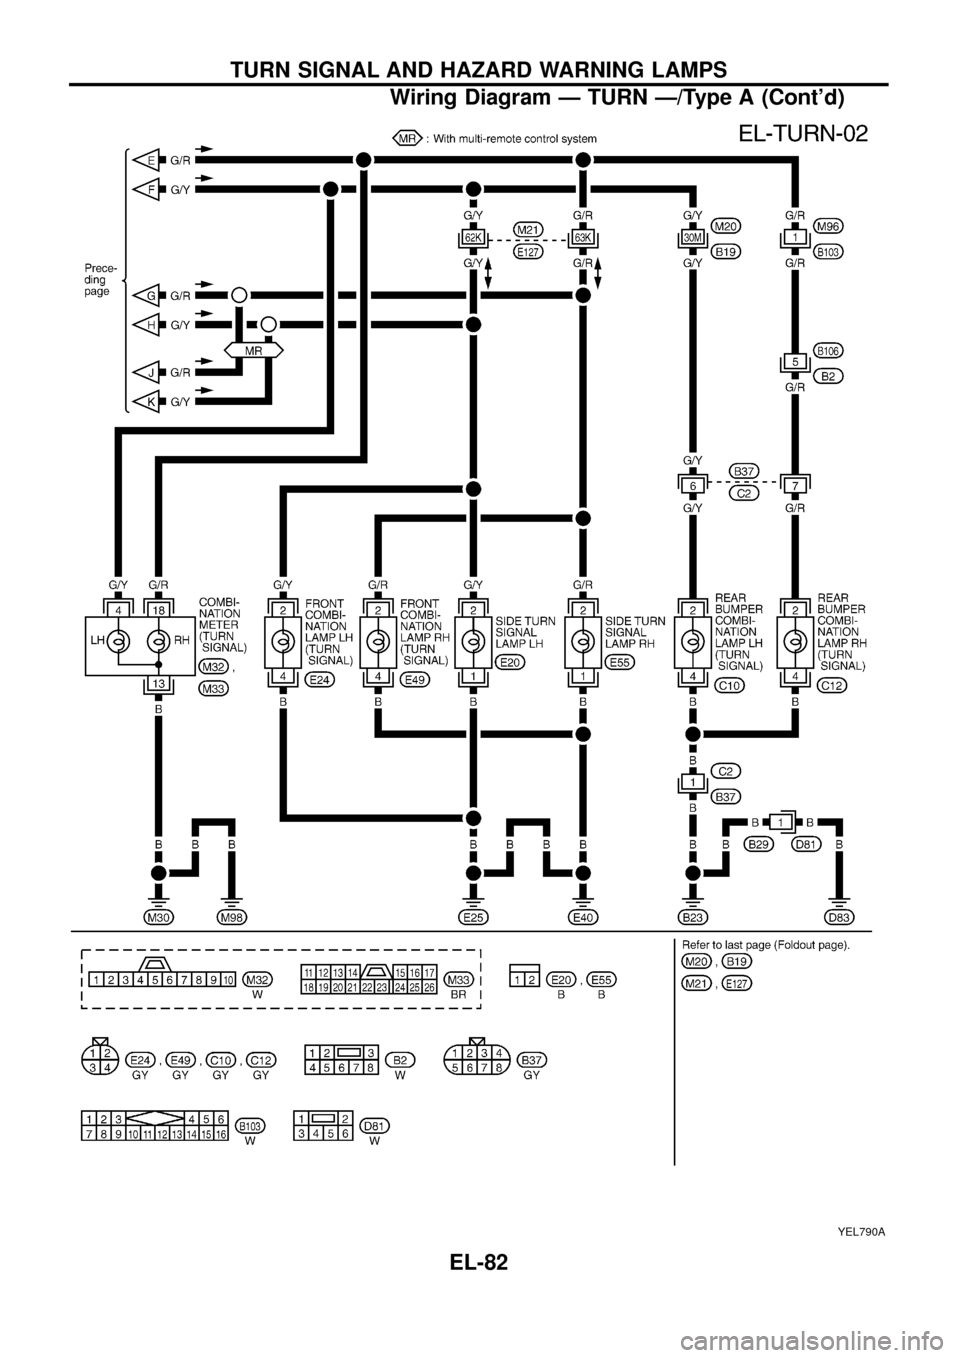 NISSAN PATROL 1998 Y61 / 5.G Electrical System Workshop Manual YEL790A
TURN SIGNAL AND HAZARD WARNING LAMPS
Wiring Diagram Ð TURN Ð/Type A (Contd)
EL-82 